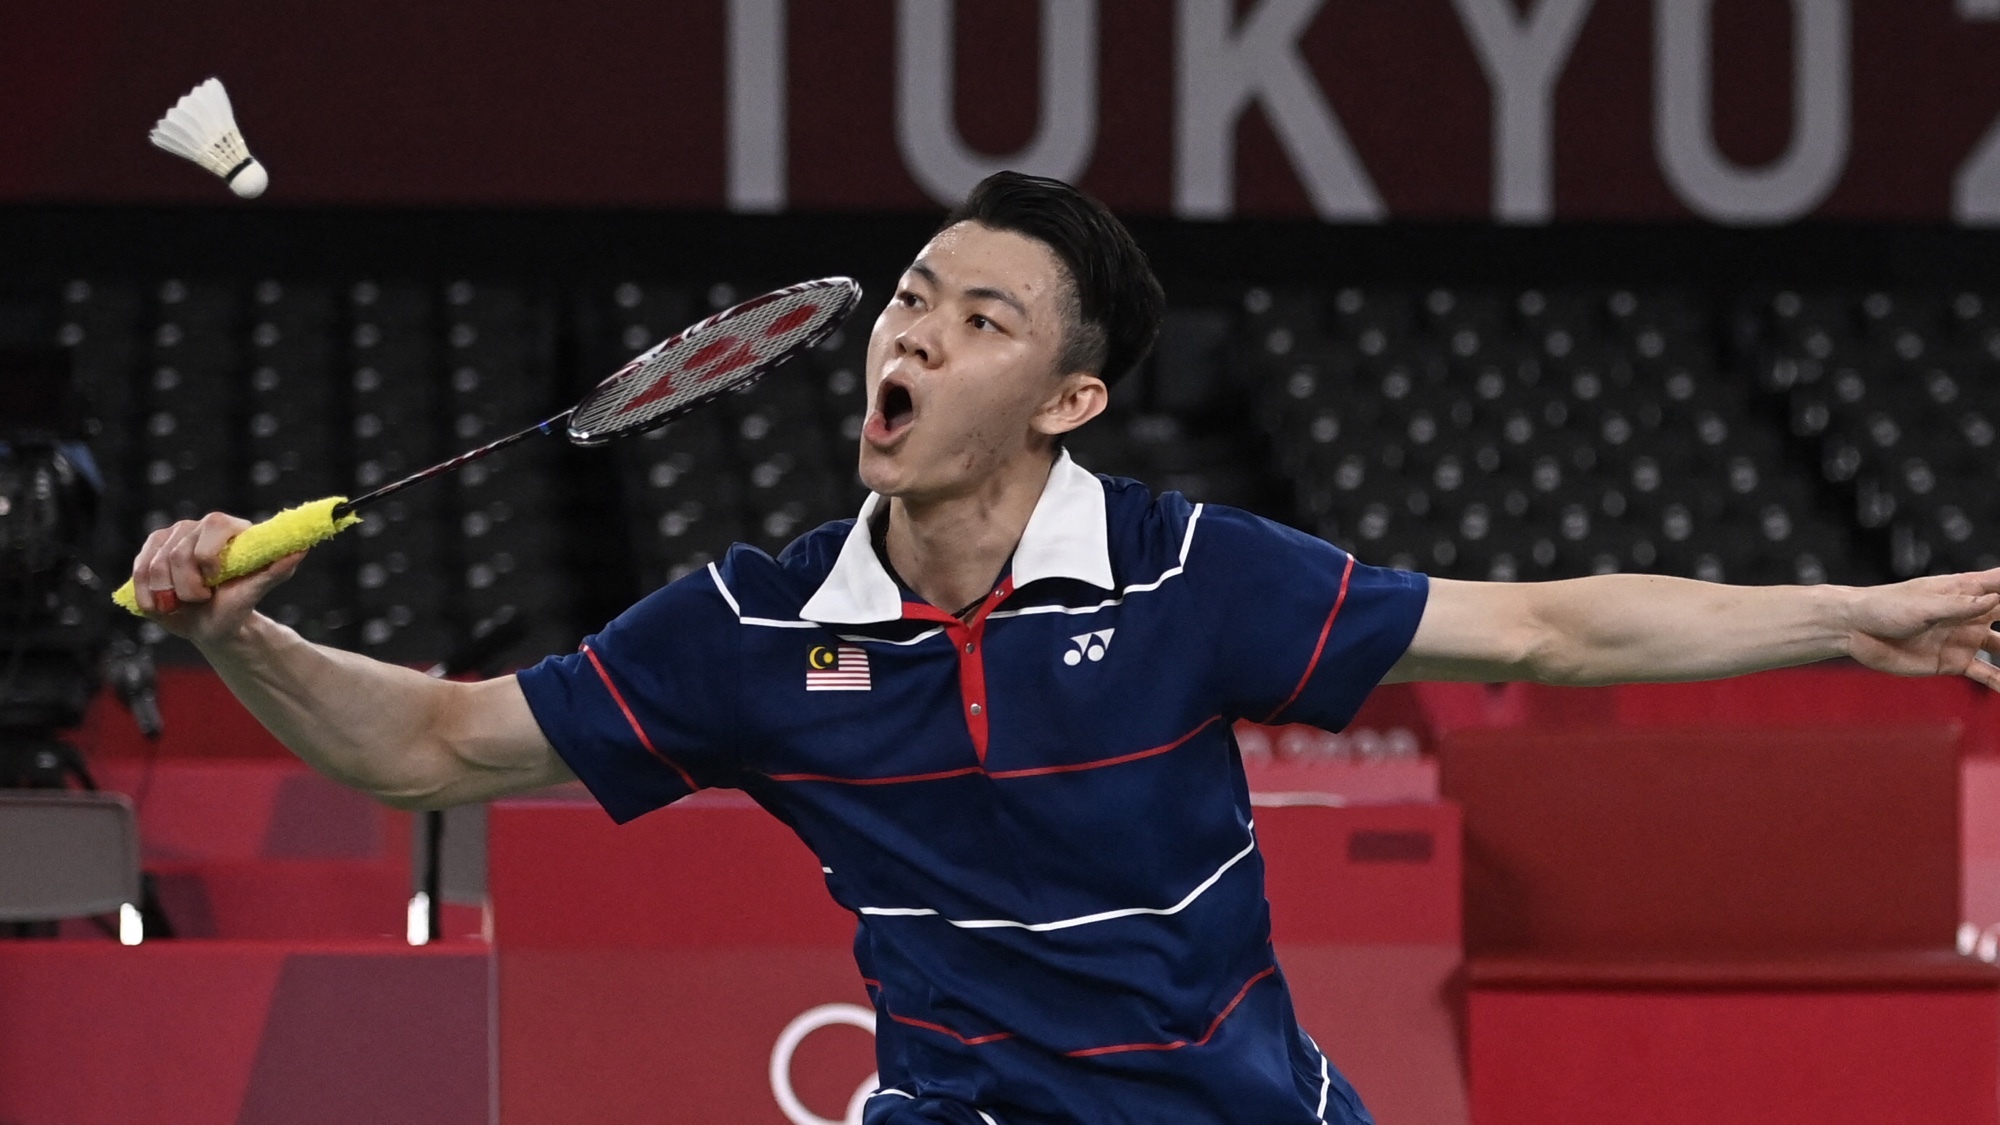 Tokyo olympics badminton live